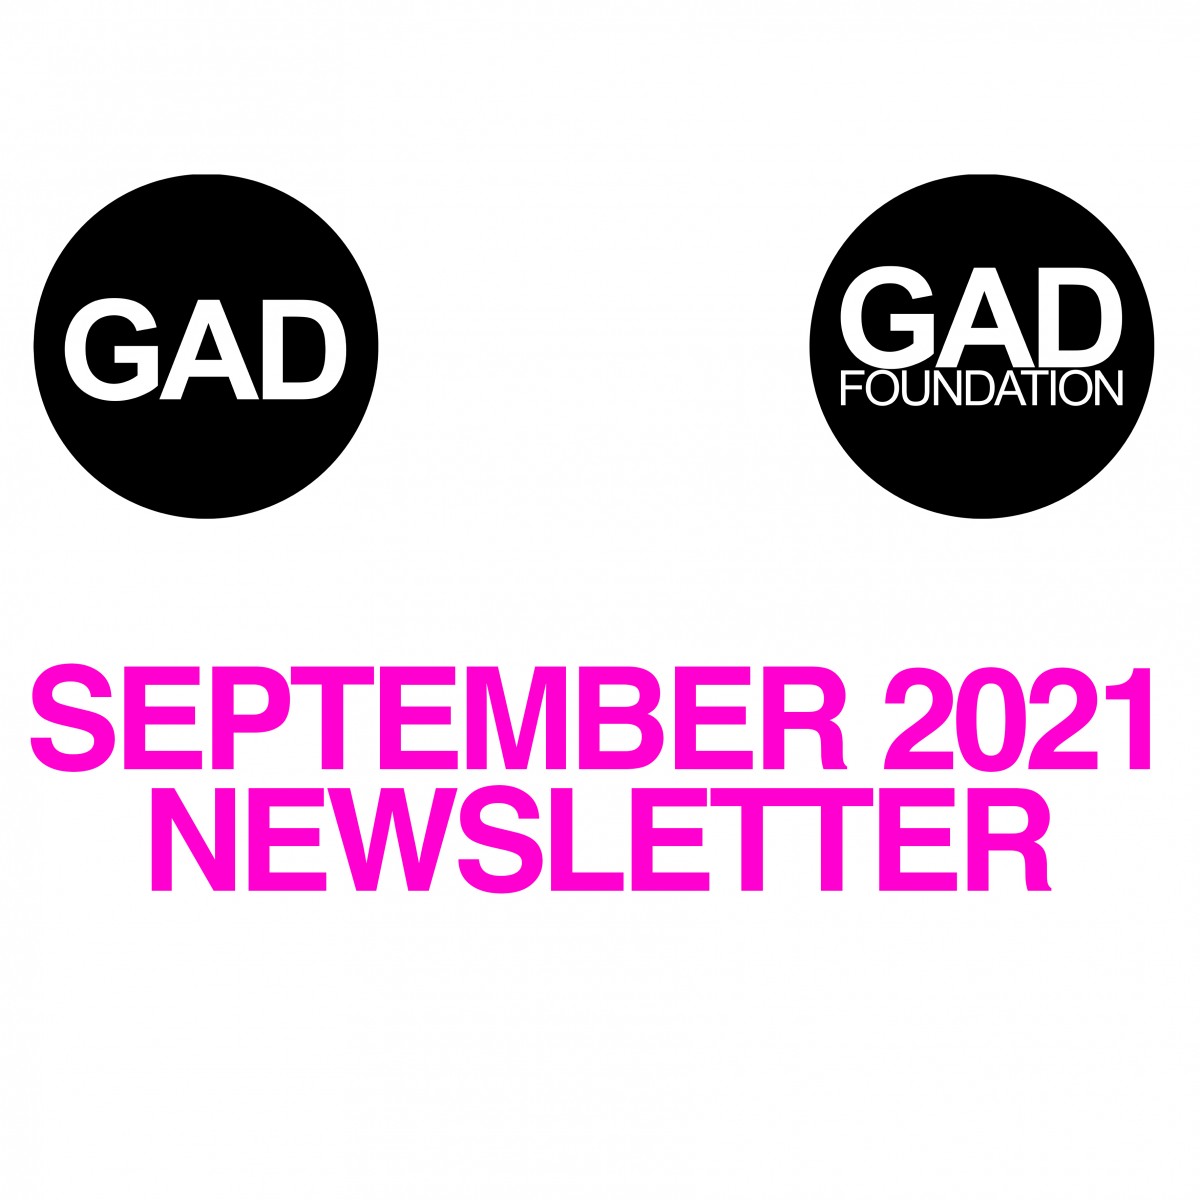 Eylül 2021 Newsletter